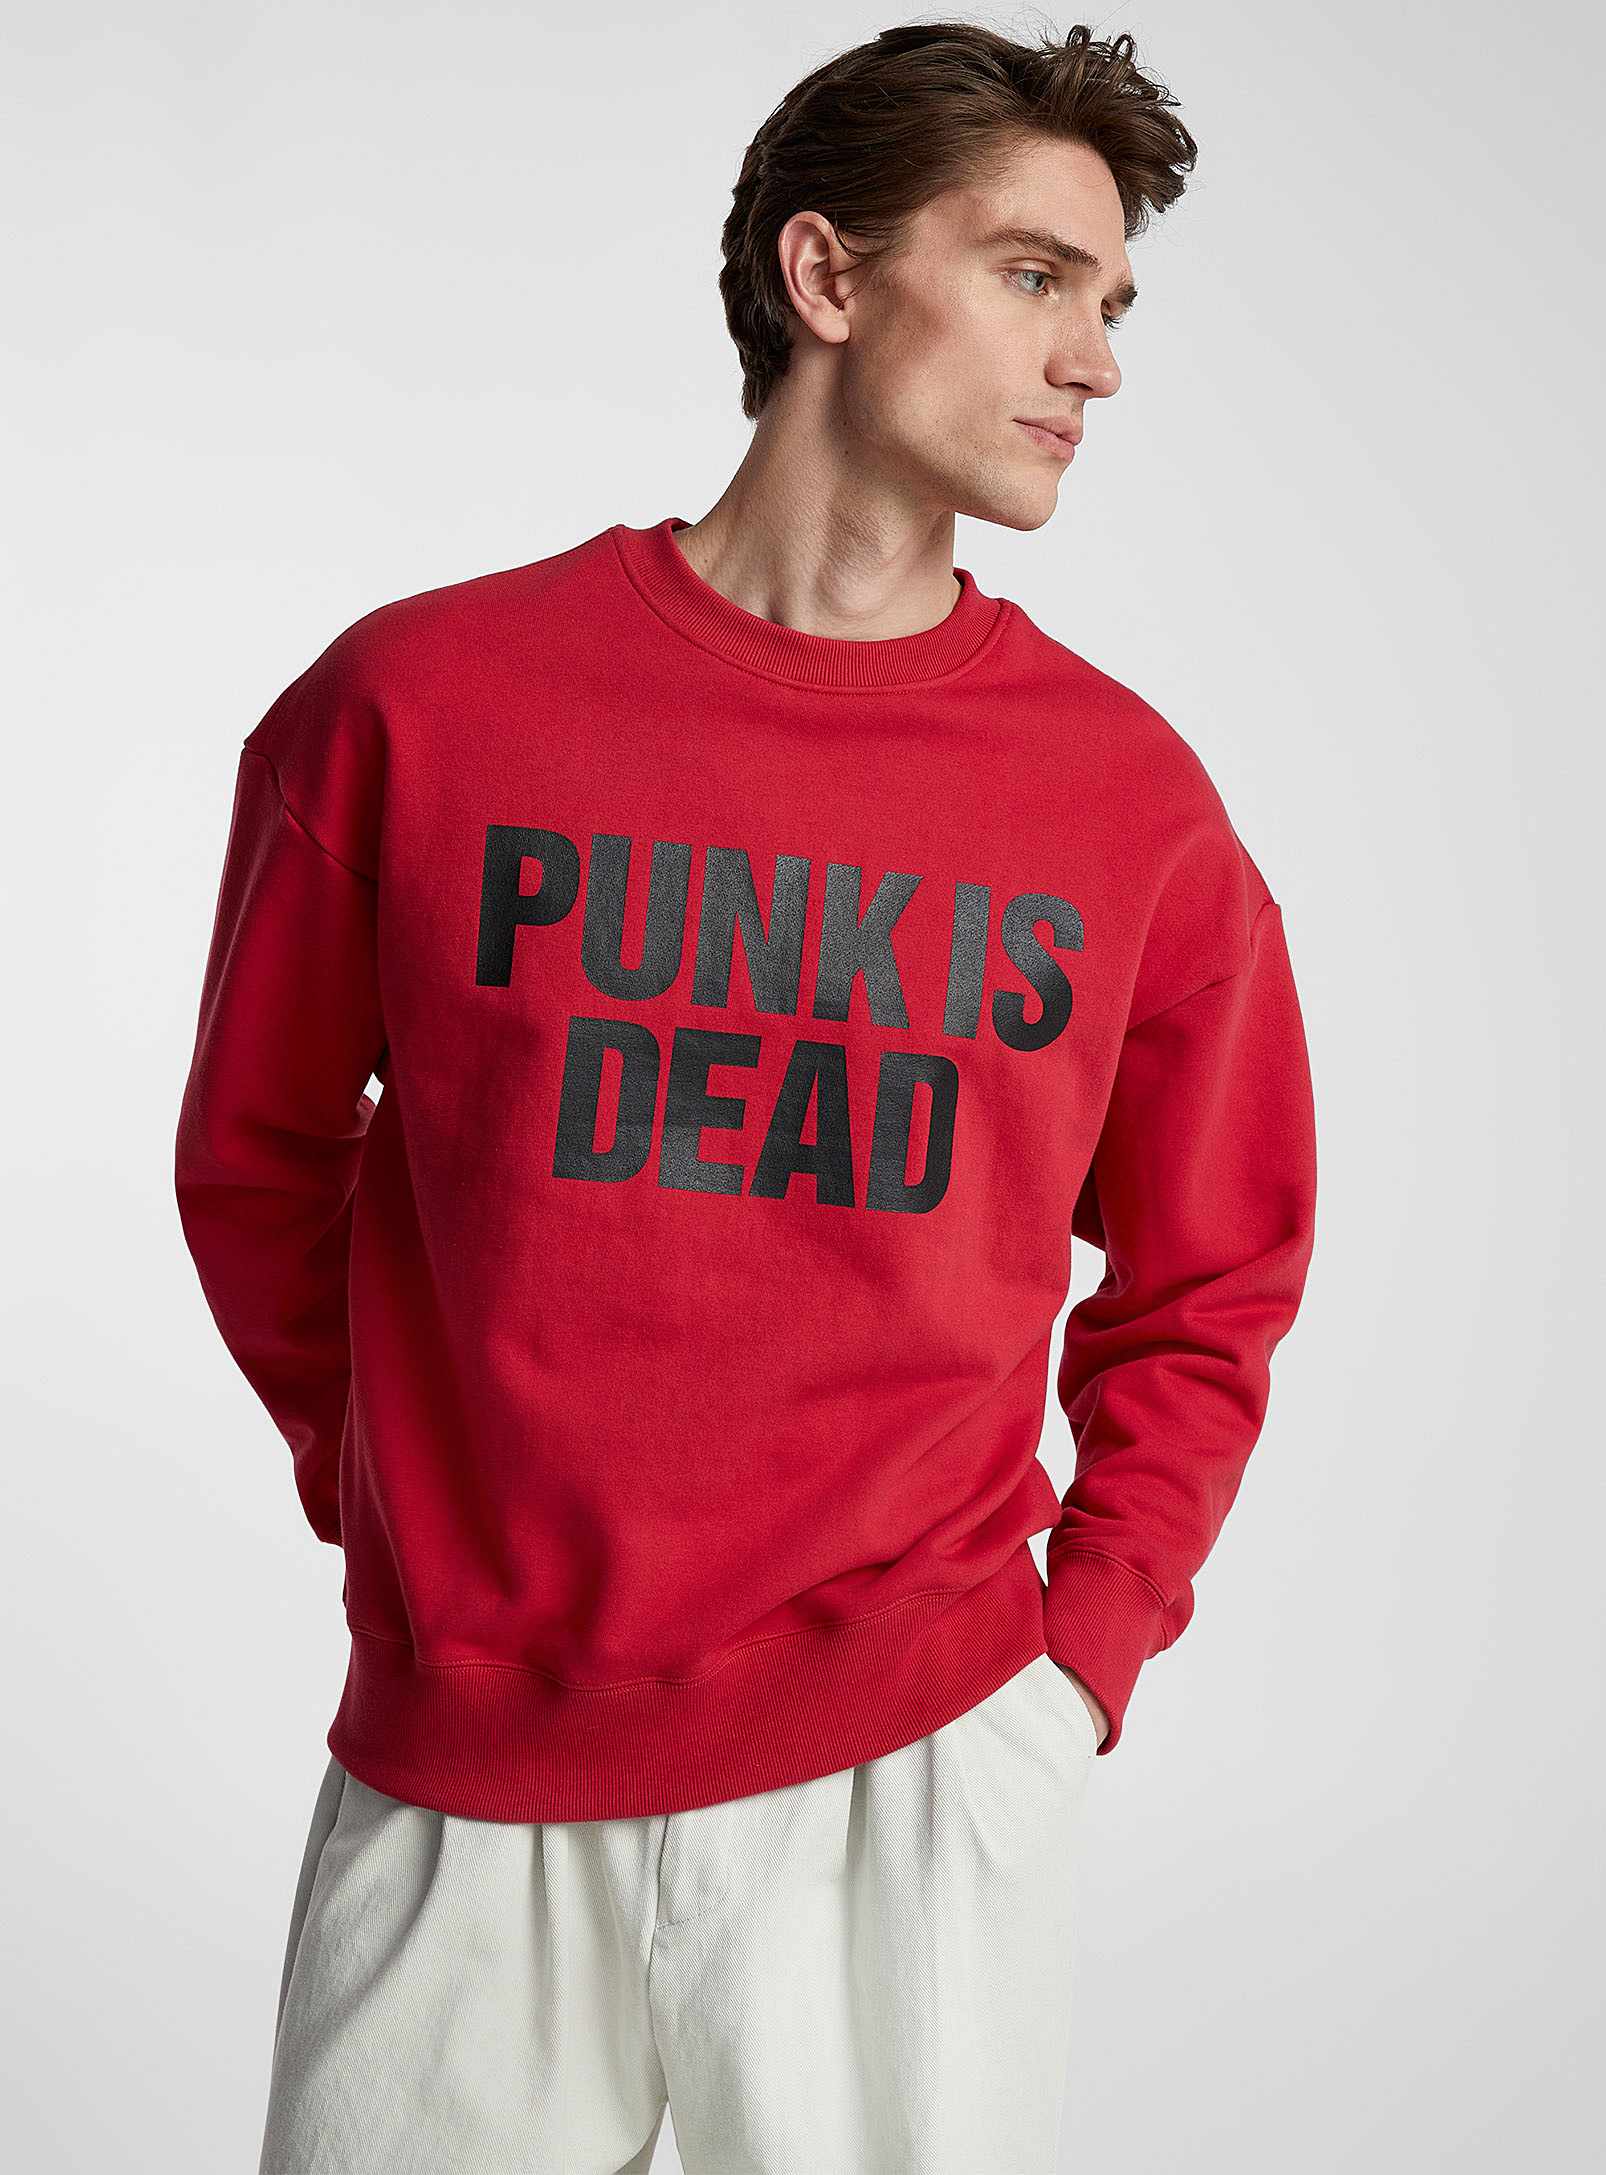 Tee Shirt Library - Men's Punk is Dead sweatshirt